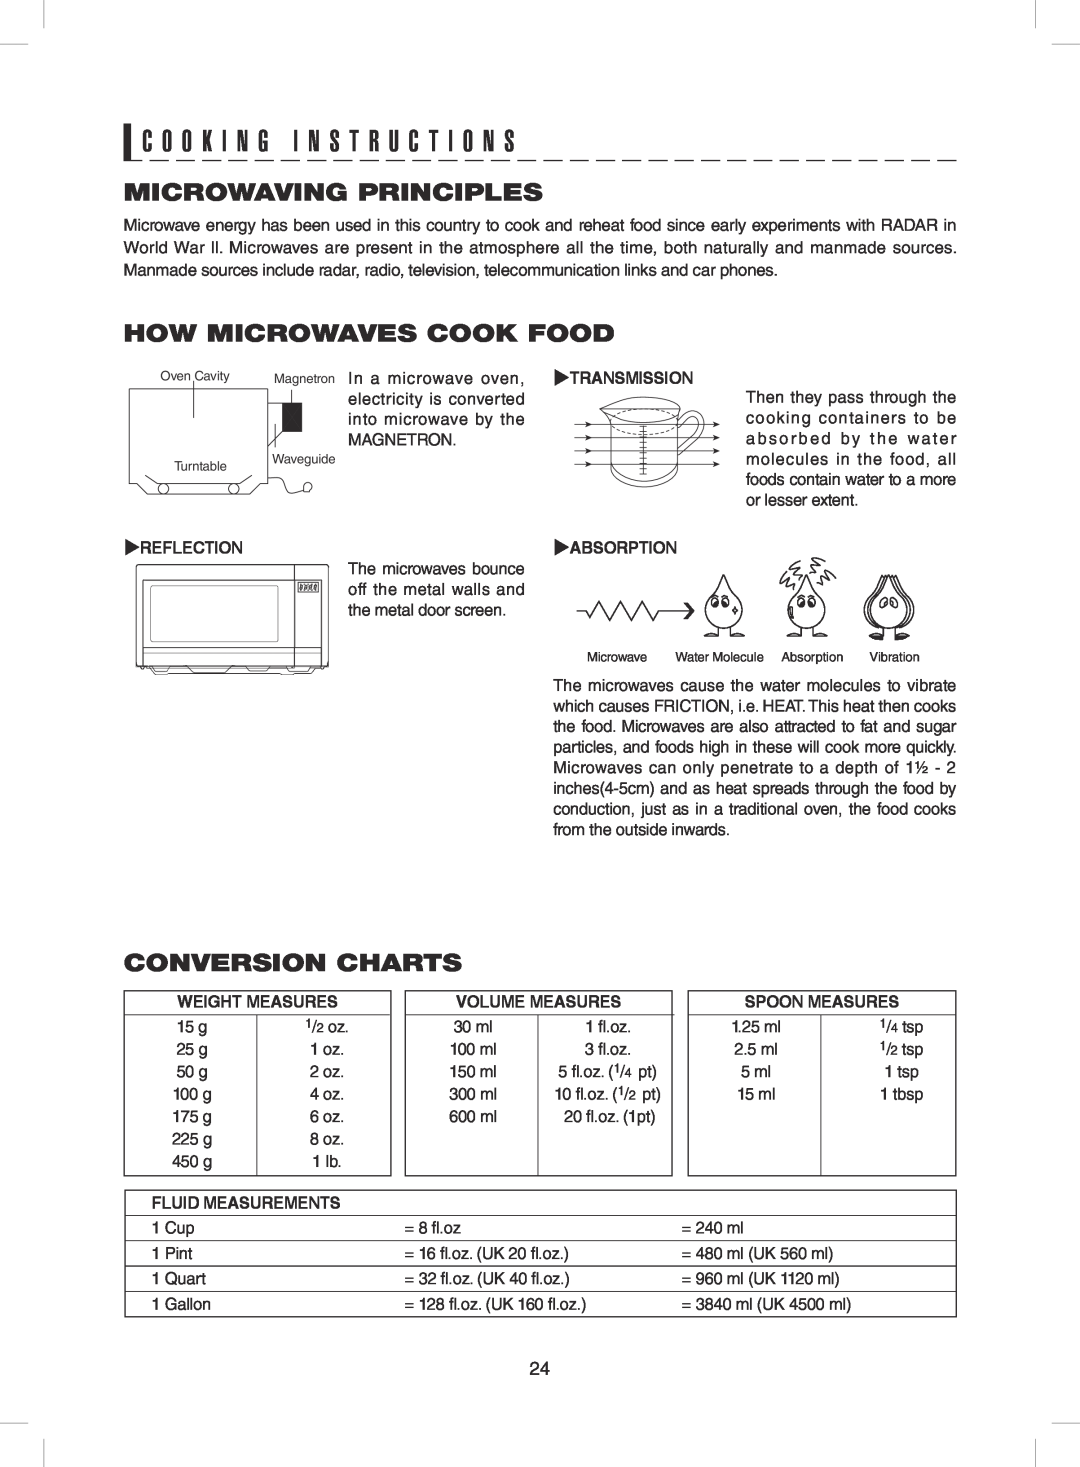 Sharp R-431ZS Microwaving Principles, How Microwaves Cook Food, Conversion Charts, C O O K I N G I N S T R U C T I O N S 